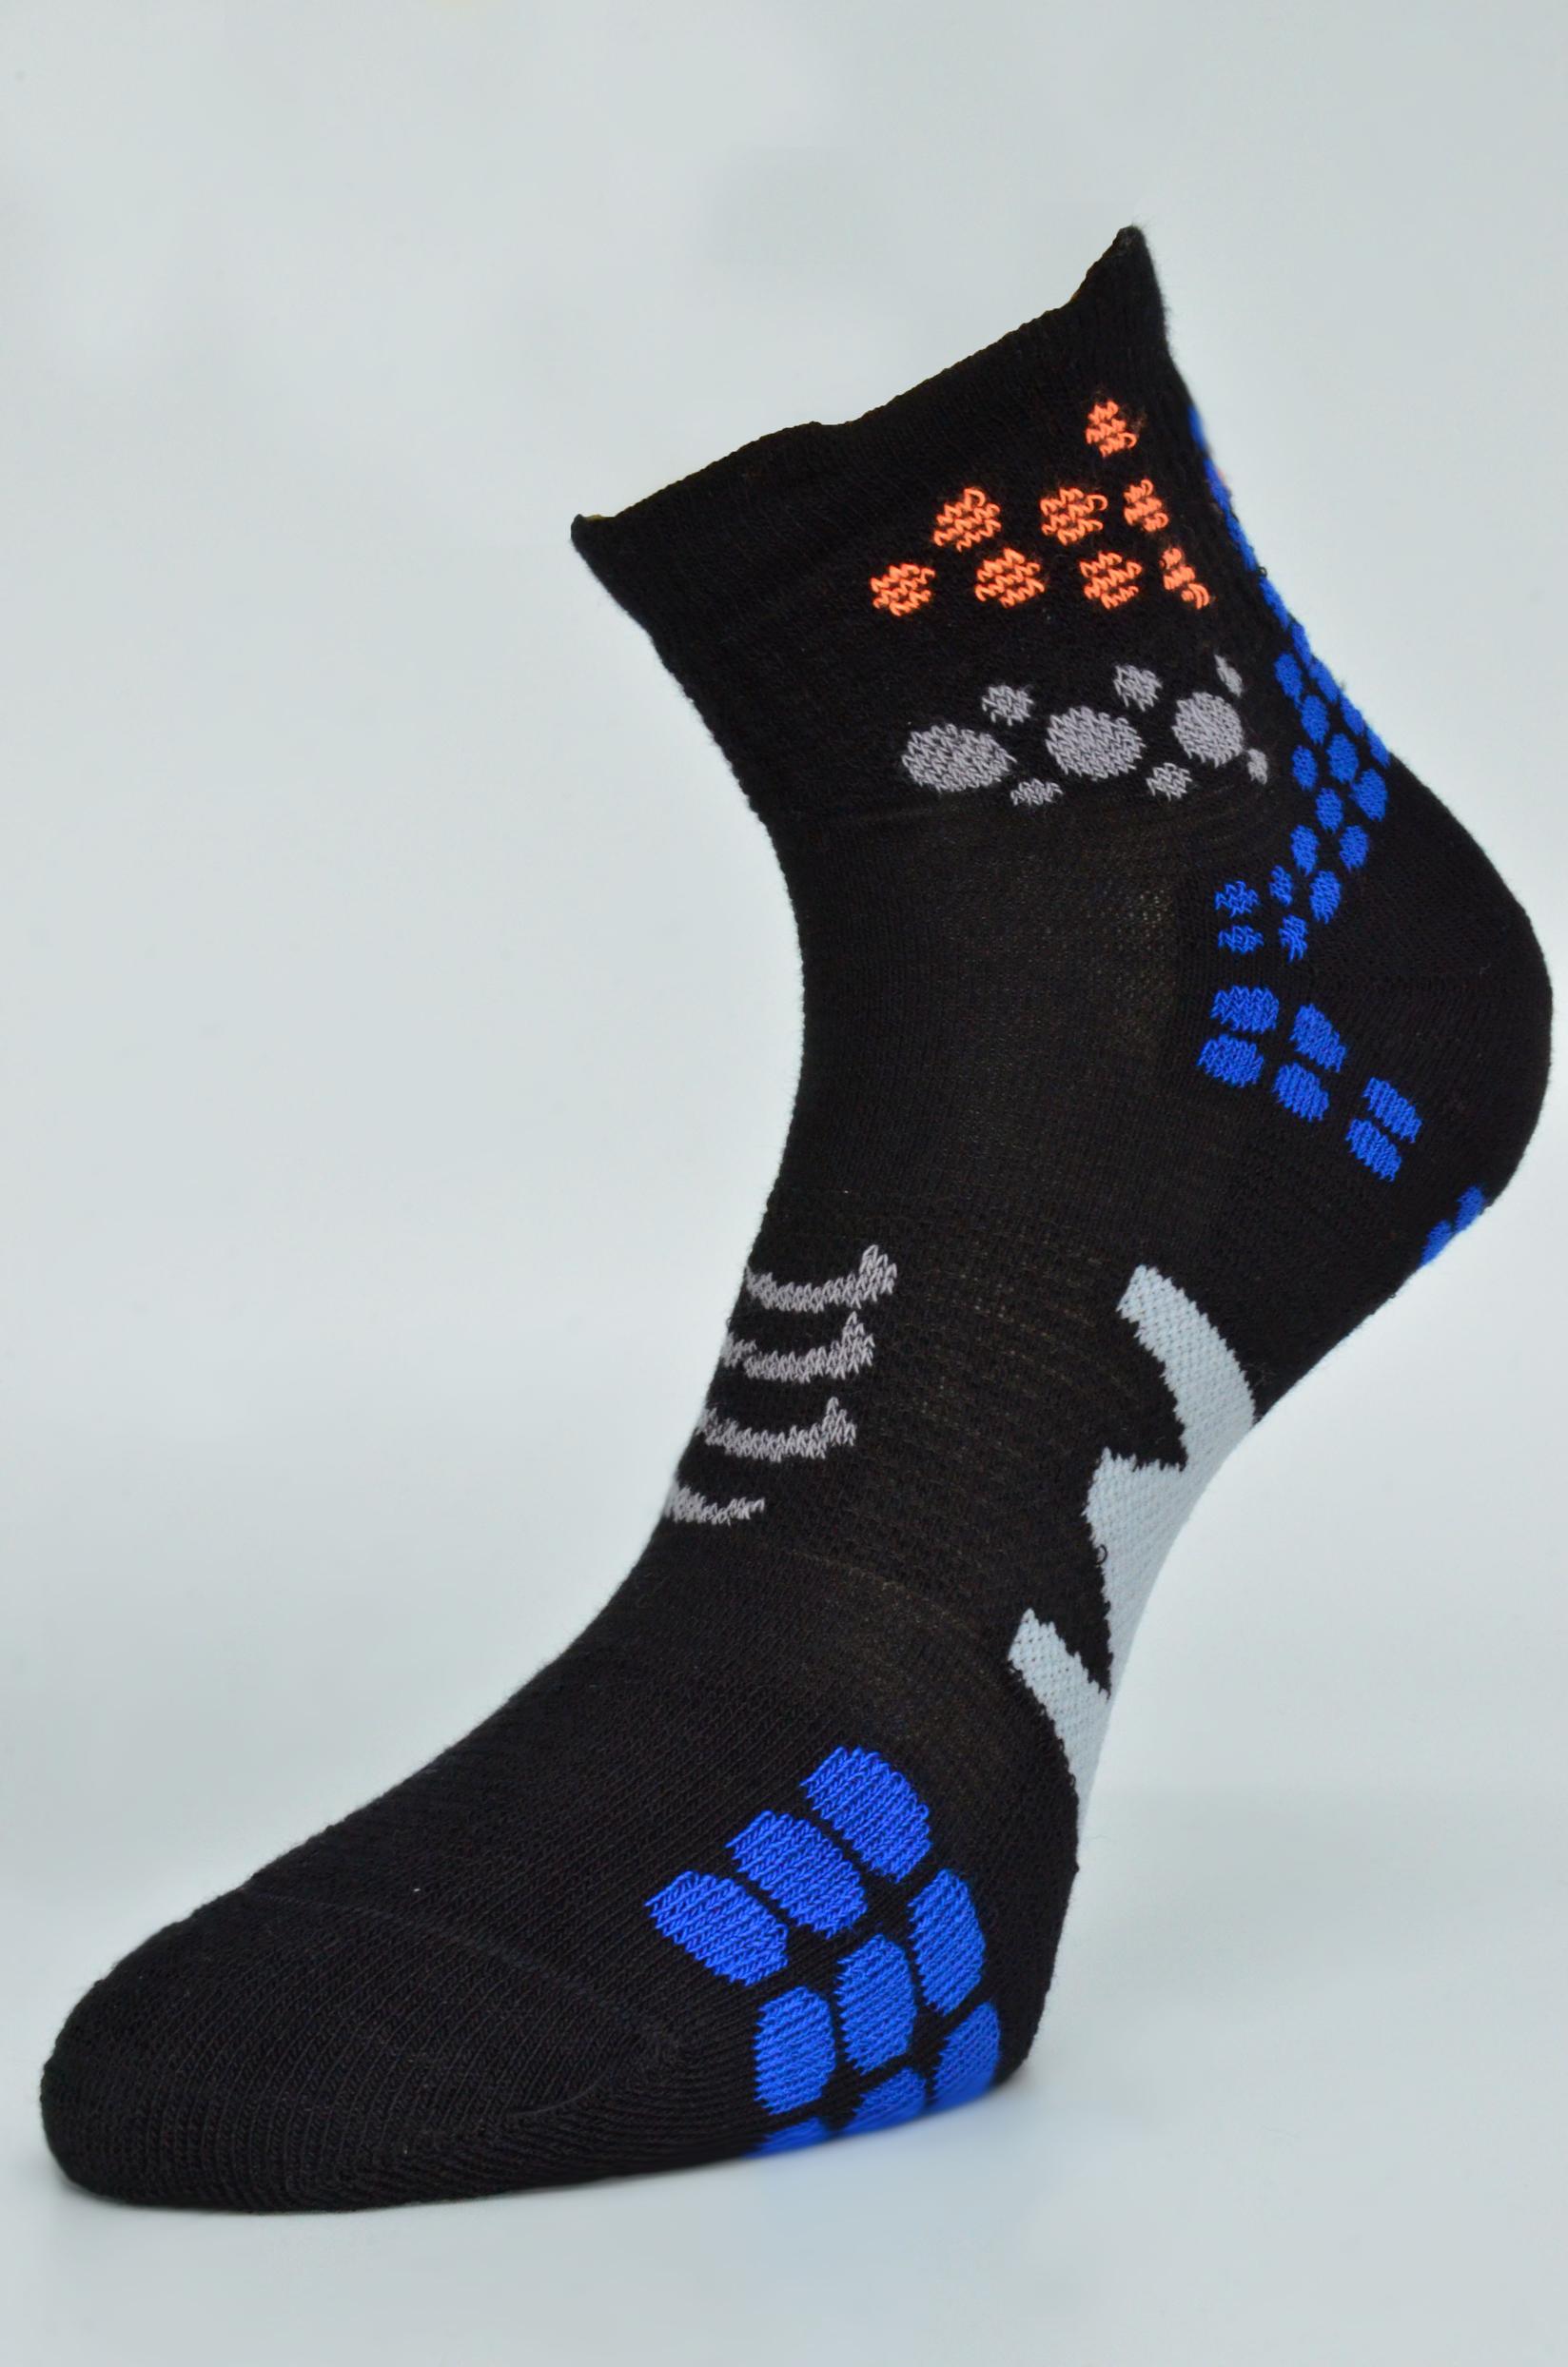 Selected image for GERBI Sportske čarape Sprinter m3 crne